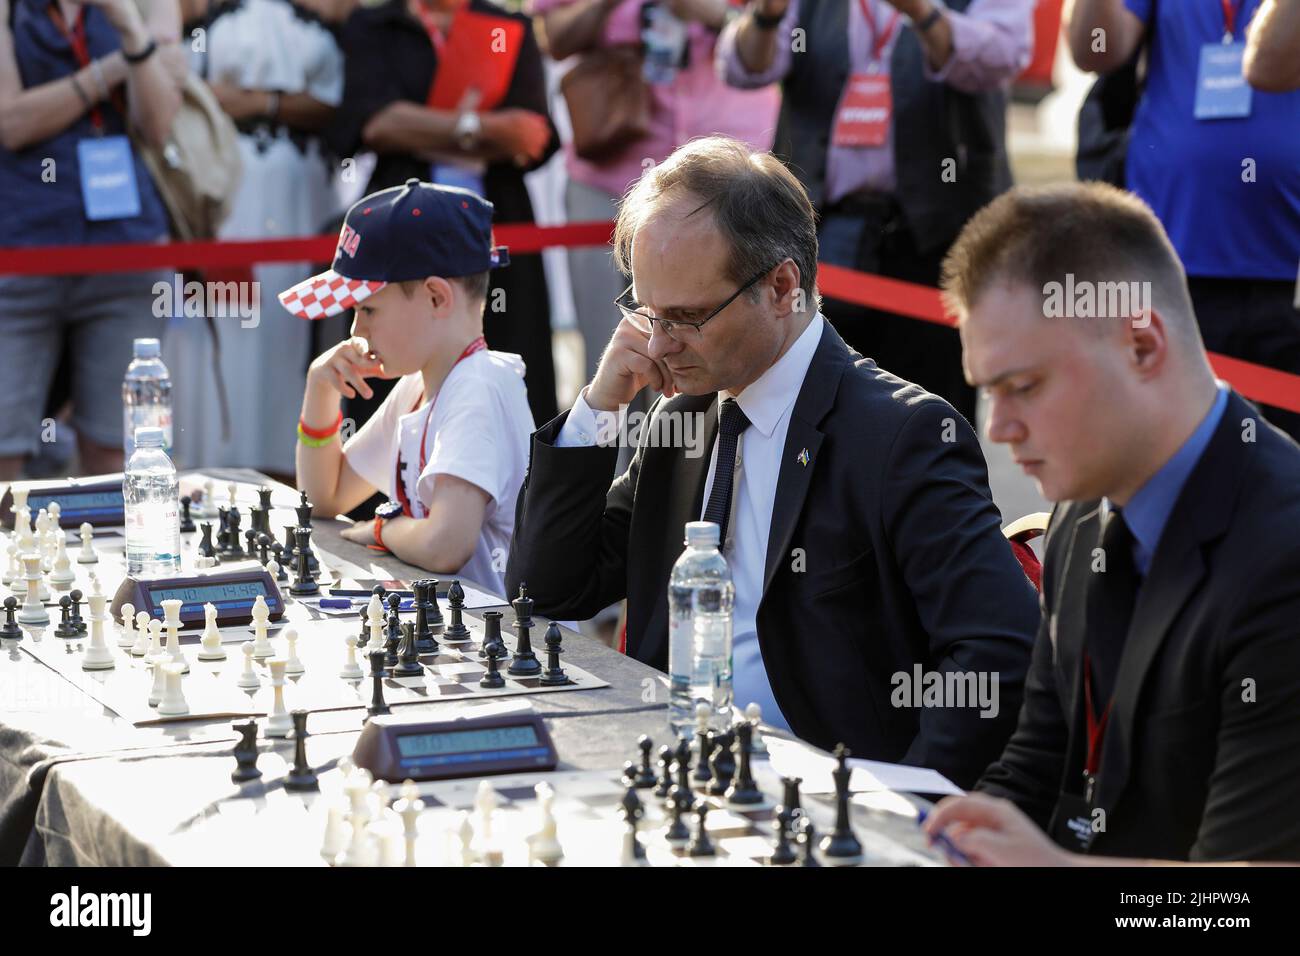 super united croatia grand chess tour